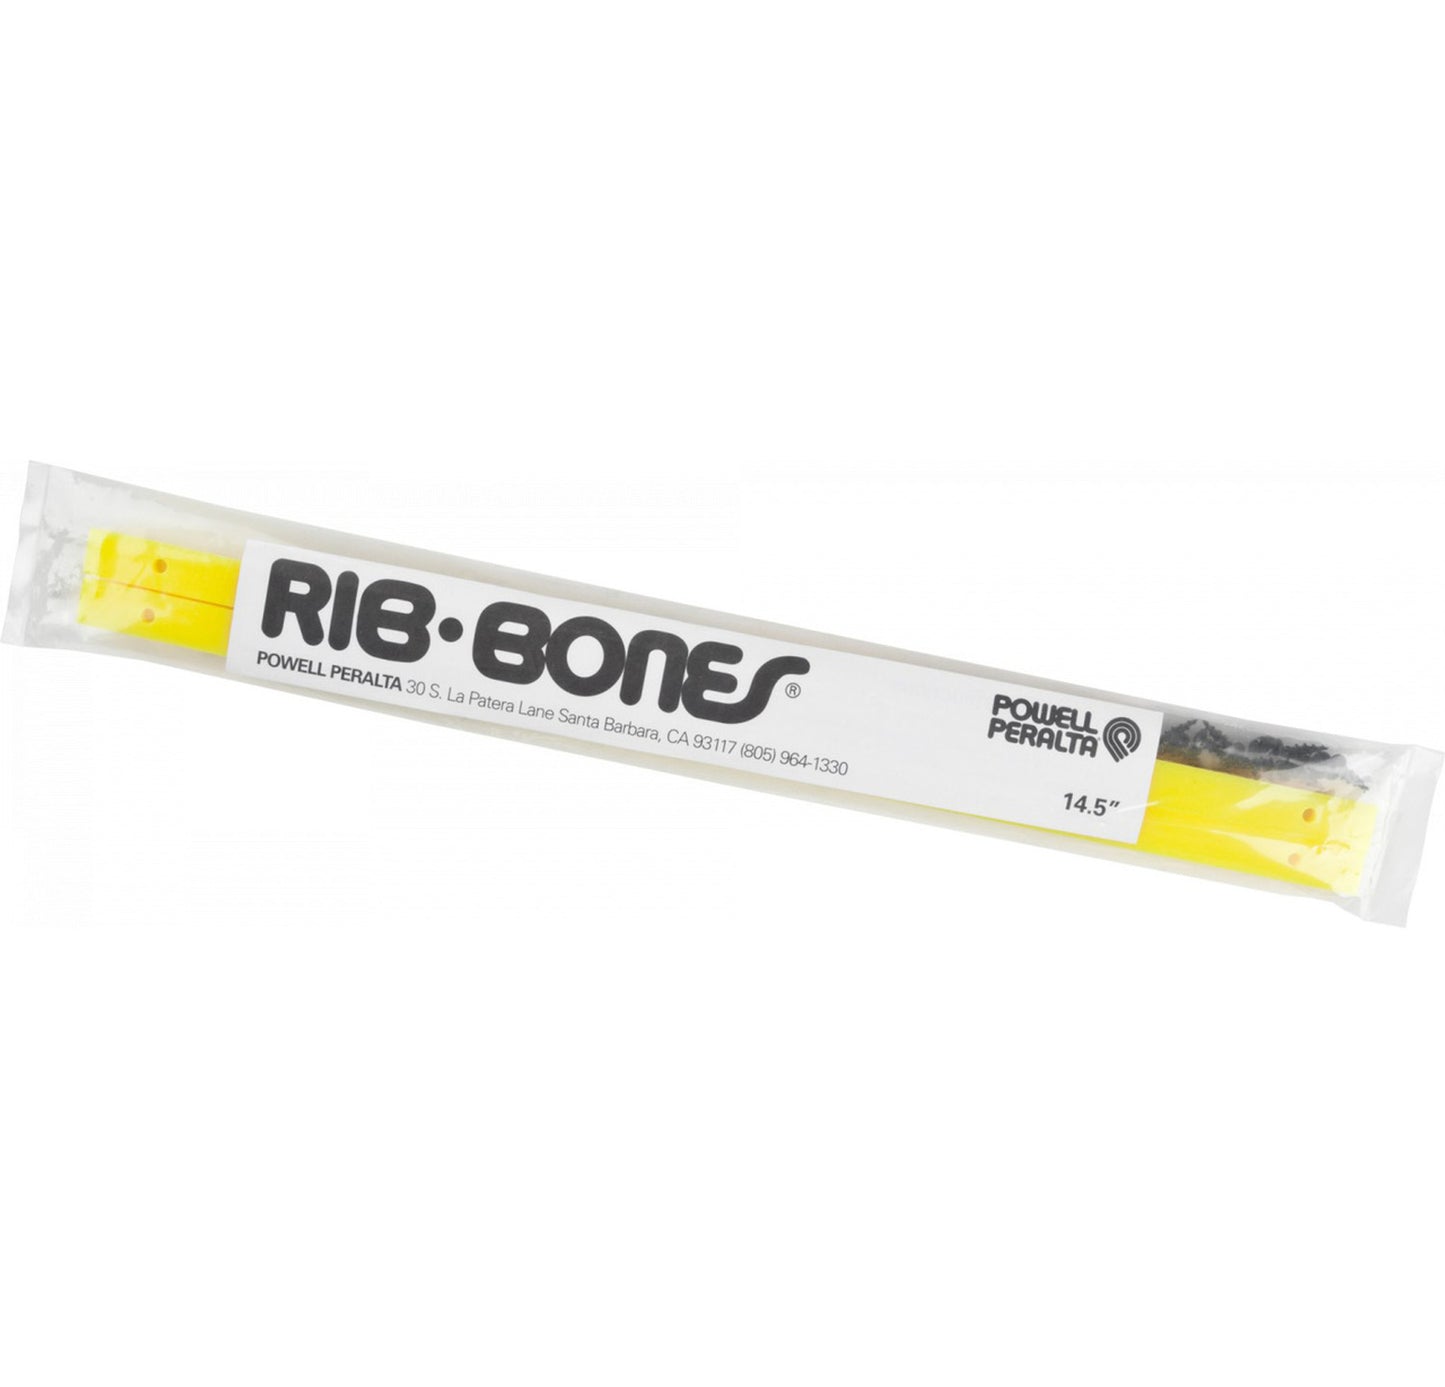 Powell Peralta Bones Rib Bones Deck Rails 14.5" Yellow